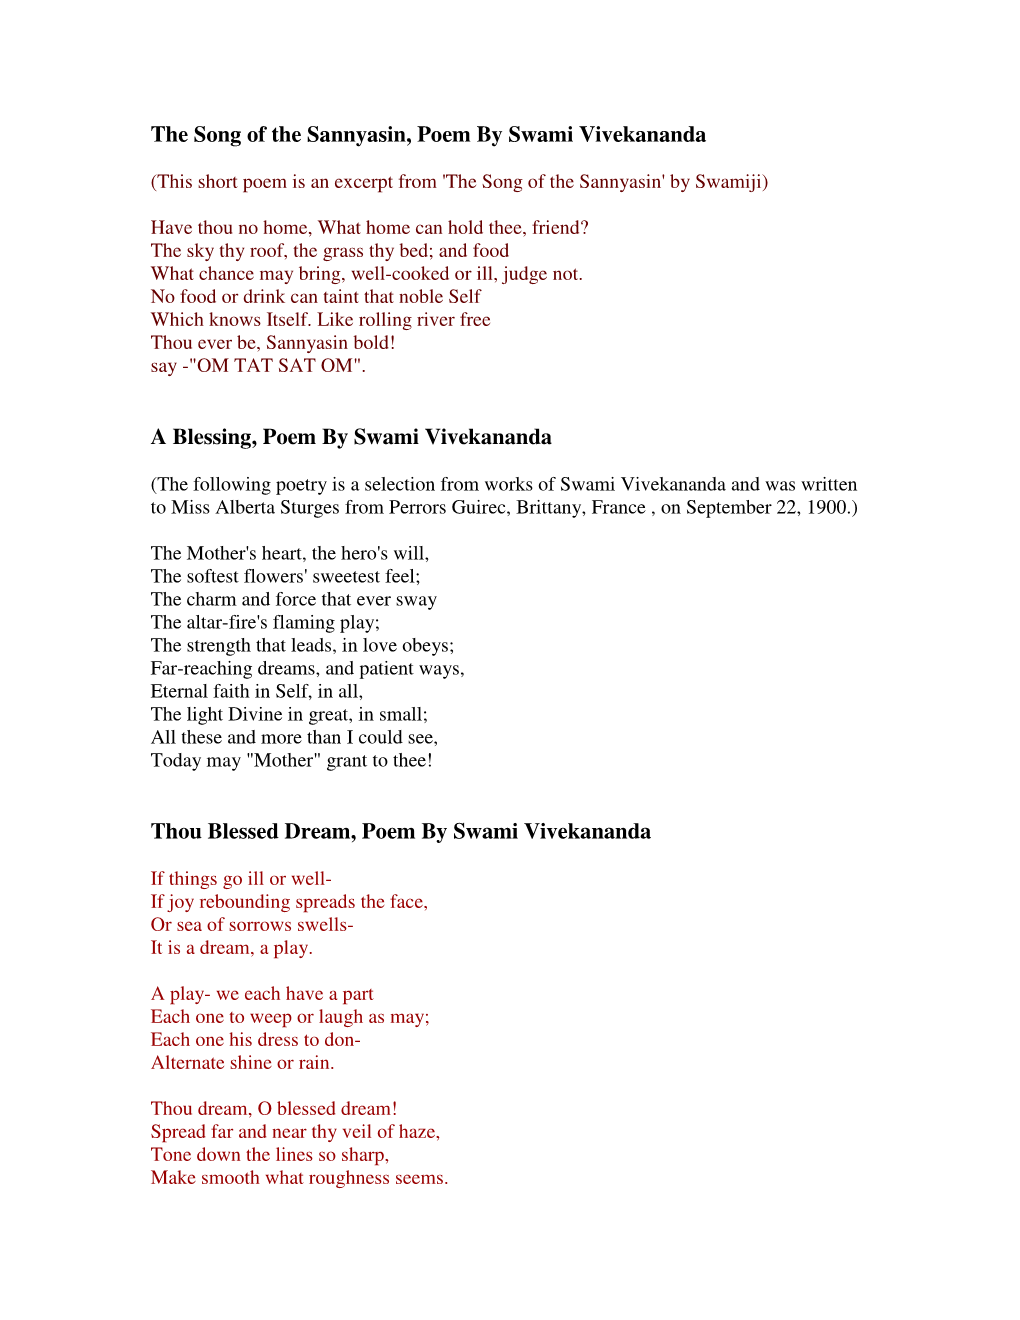 The Song of the Sannyasin, Poem by Swami Vivekananda a Blessing